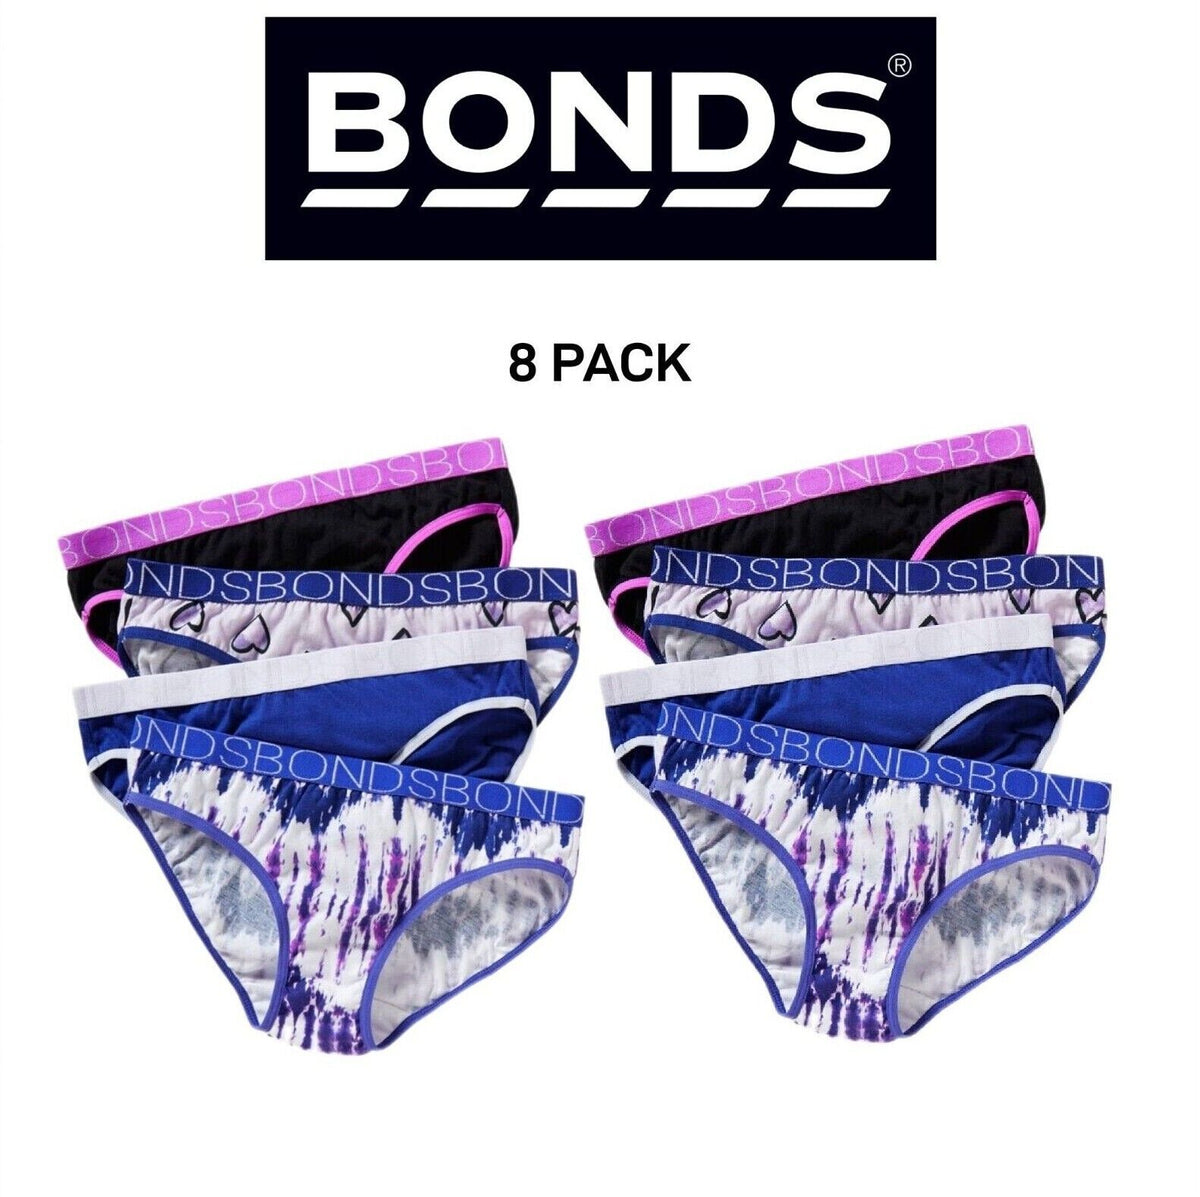 Bonds Girls Bikini Soft Breathable Cotton Comfortable Coverage 8 Pack UXYH4A